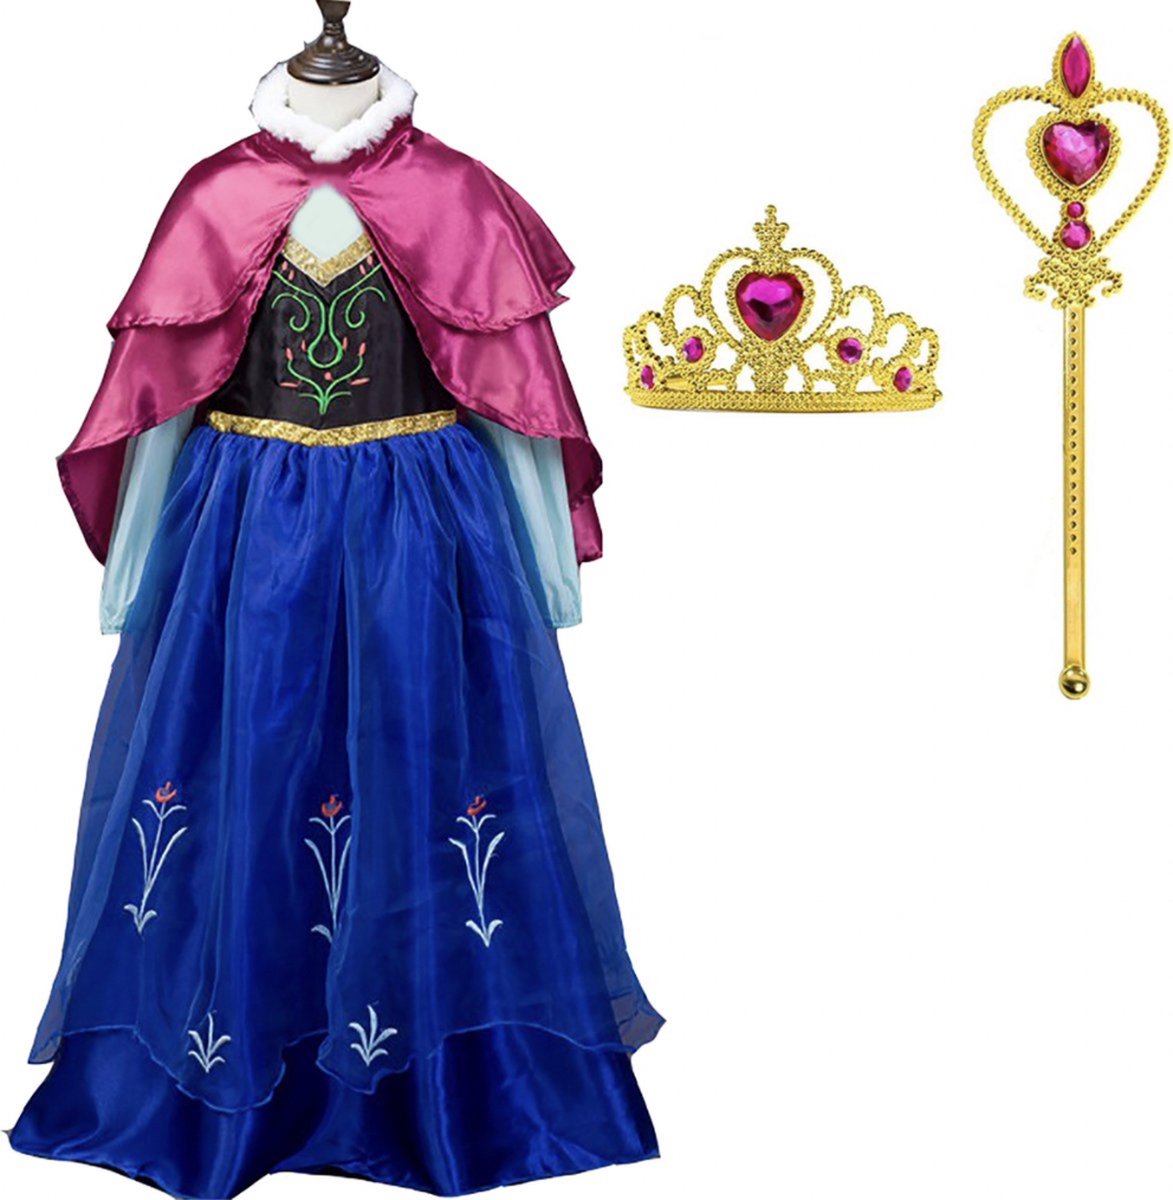 Het Betere Merk - Prinsessenjurk meisje - Blauwe verkleedjurk - Roze cape - maat 110/116 (120) - Speelgoed meisje - Tiara - Kroon - Toverstaf prinses - Verkleedkleren meisje - Carnavalskleren meisje